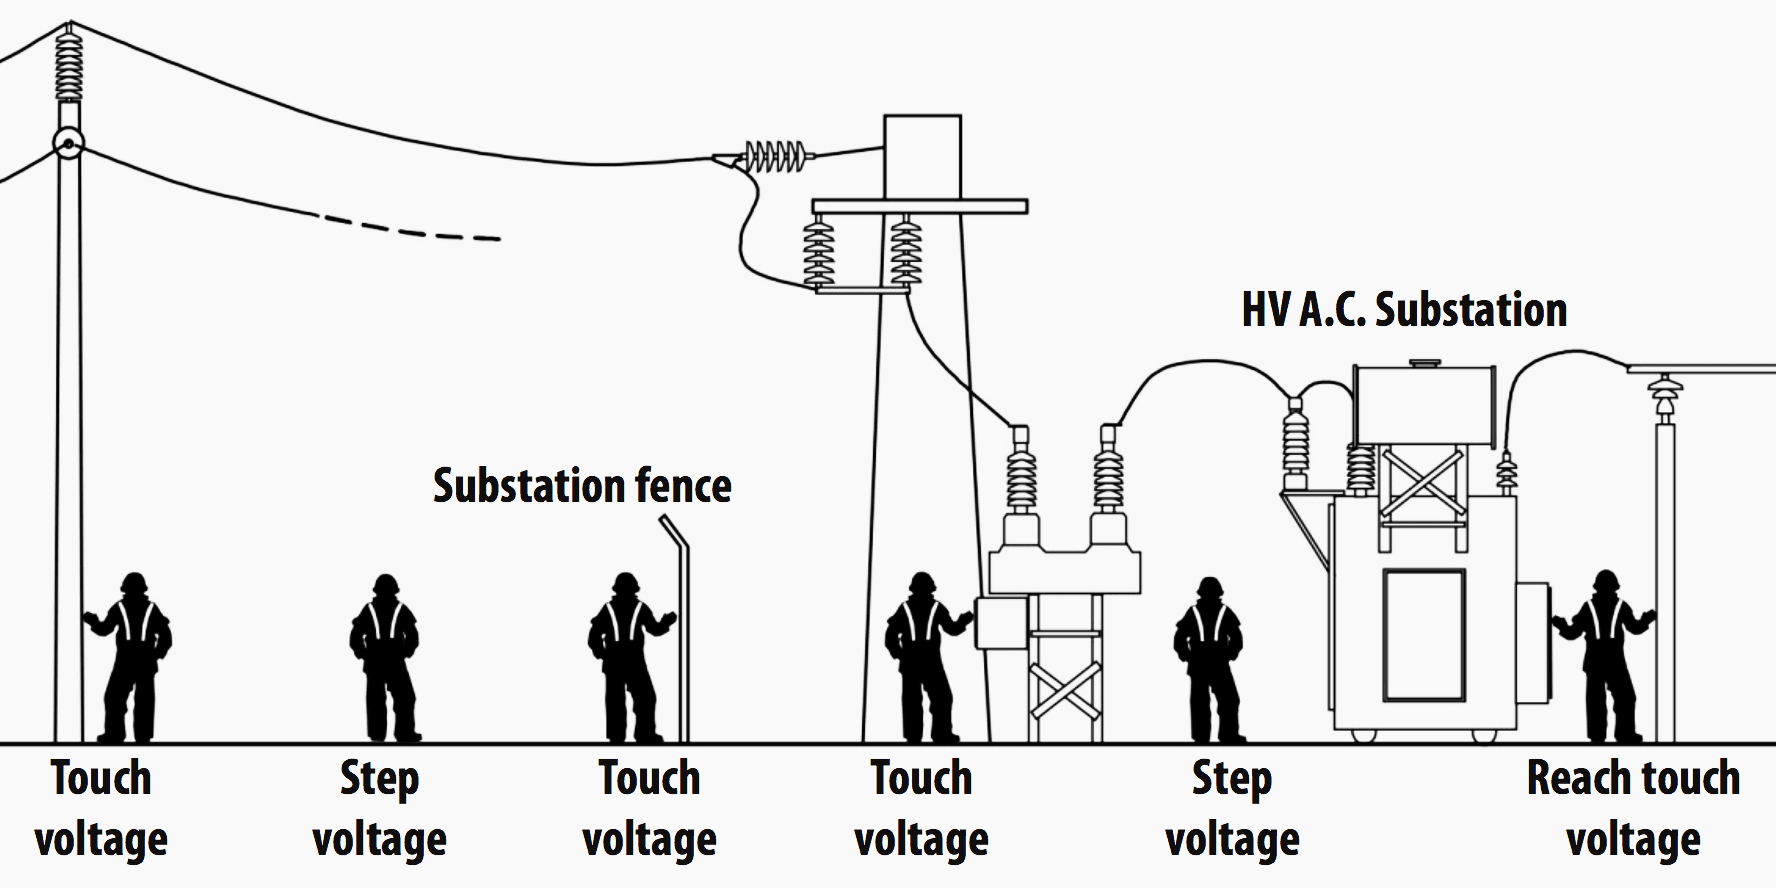  نمای شماتیک ولتاژ گام و ولتاژ تماس